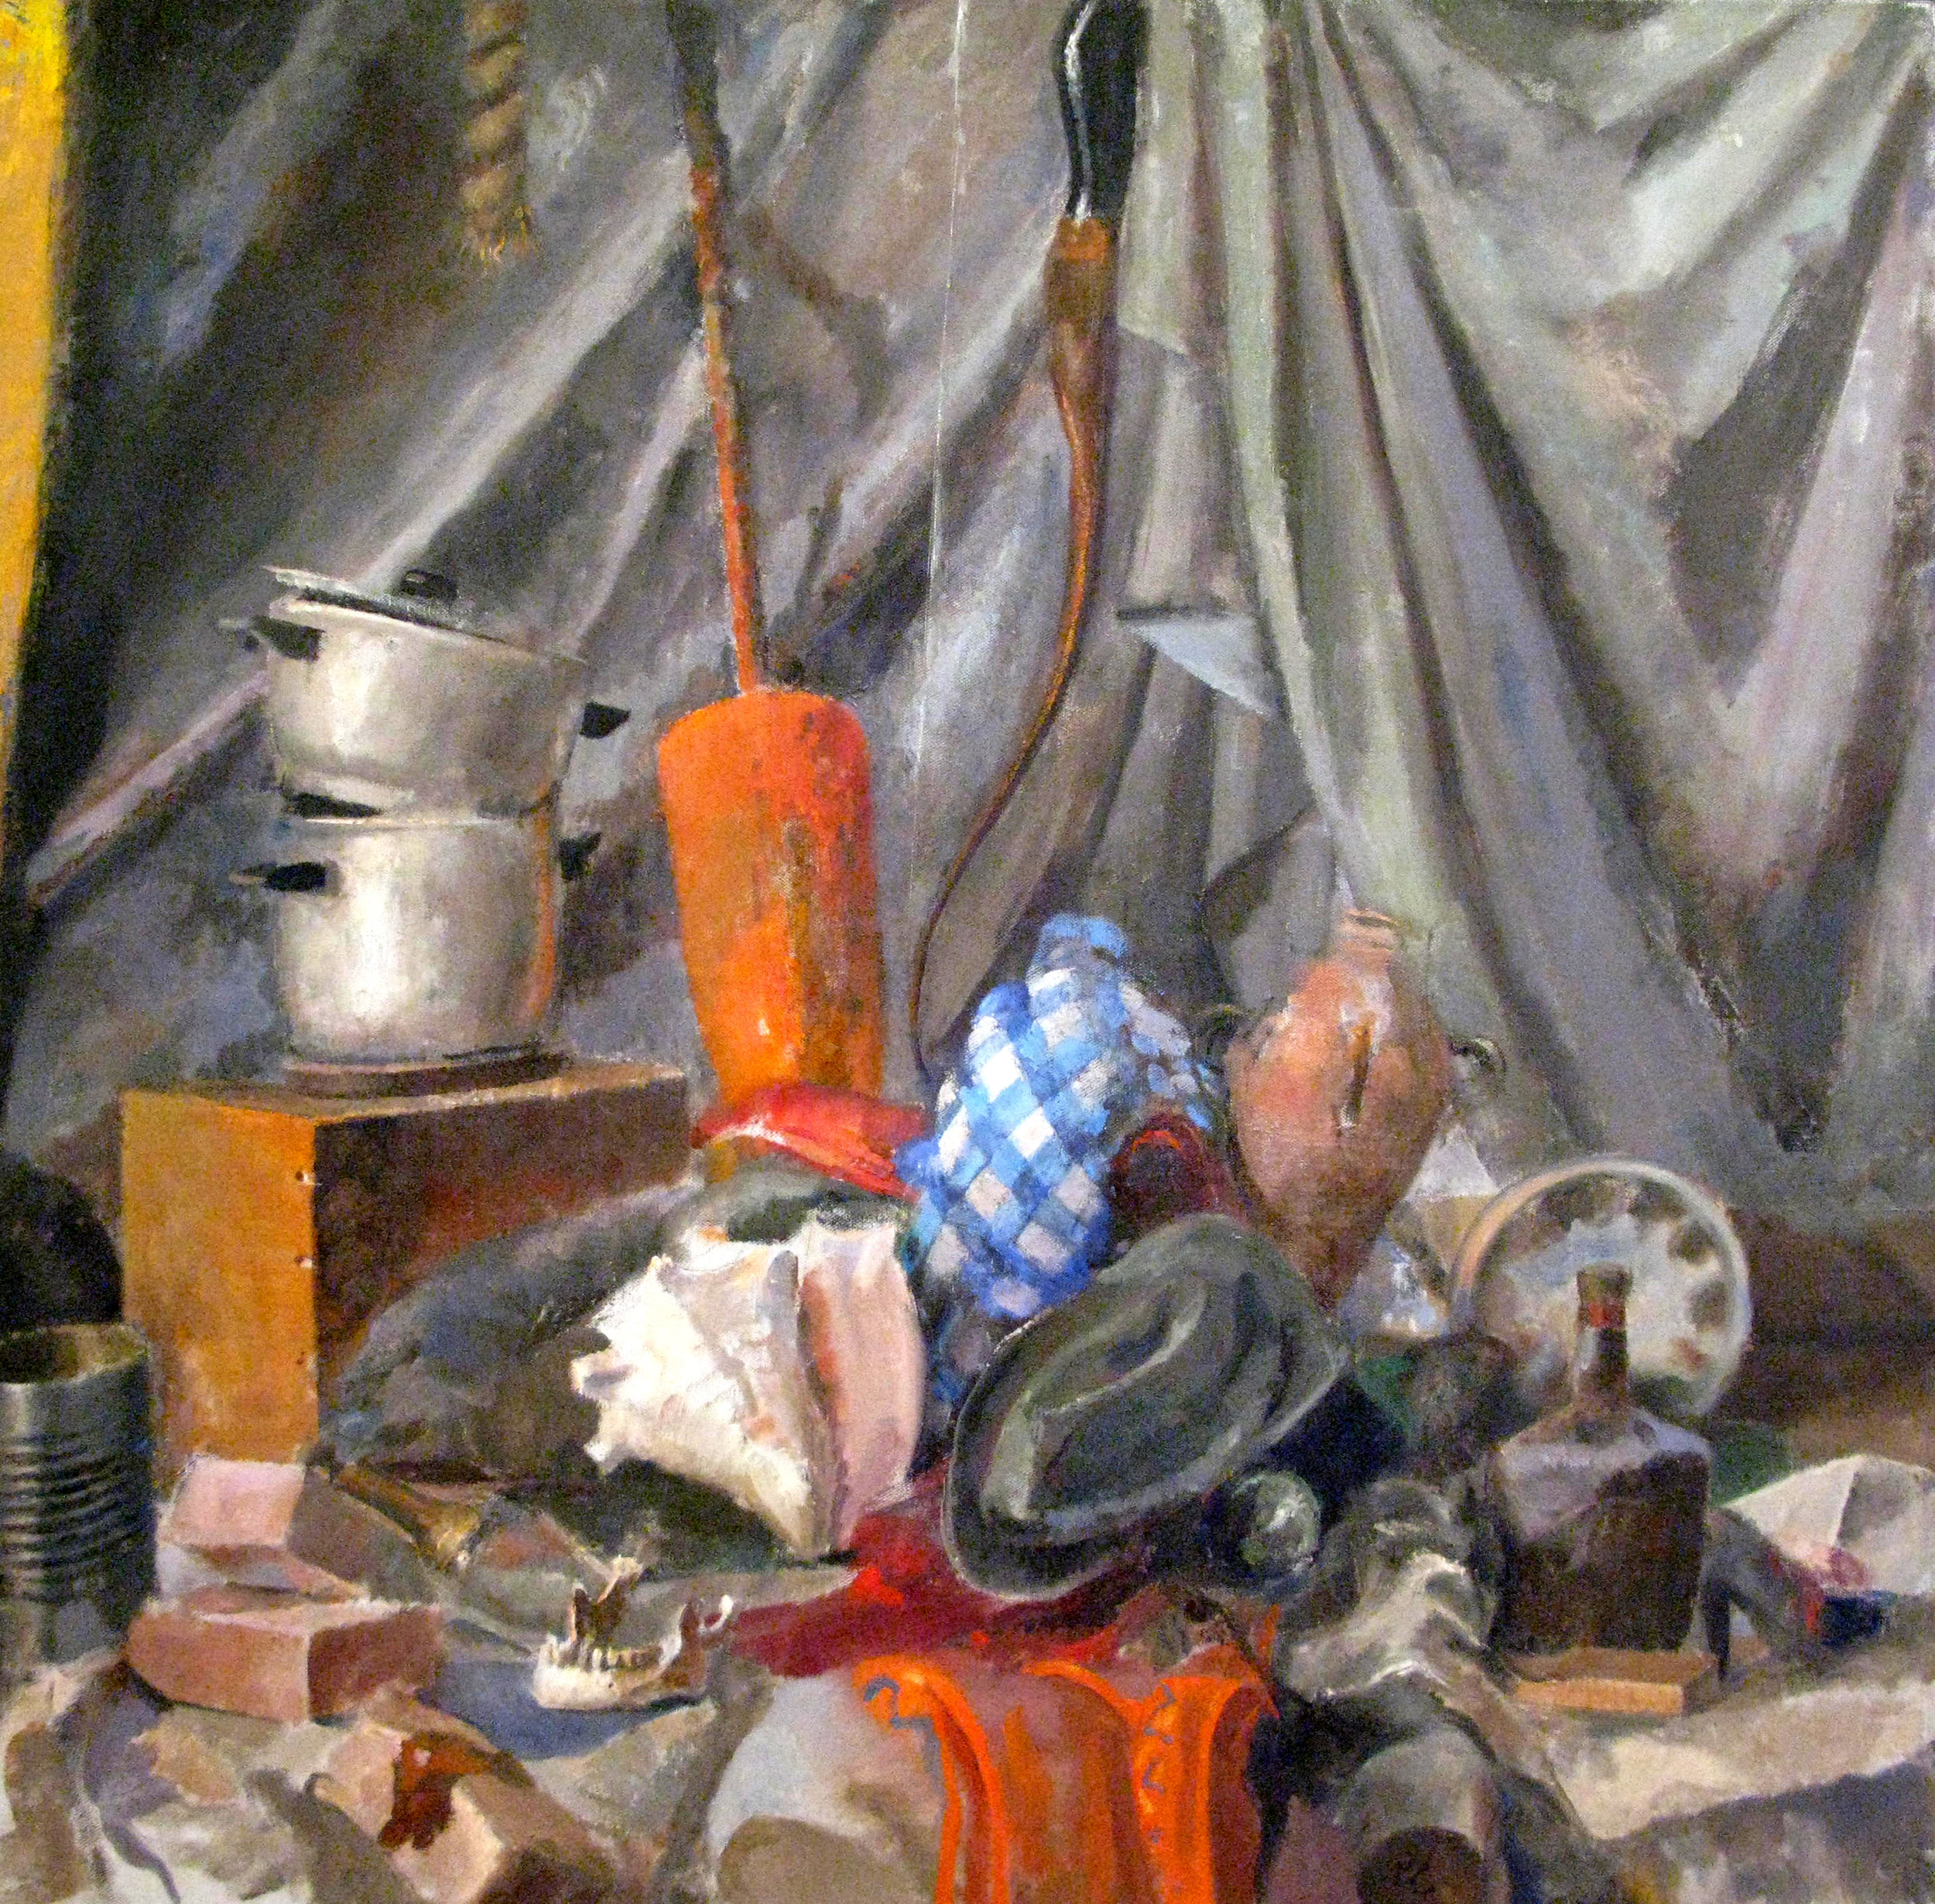 Still Life with Bricks, Bottles, 48" x 48", oil on linen, 2005